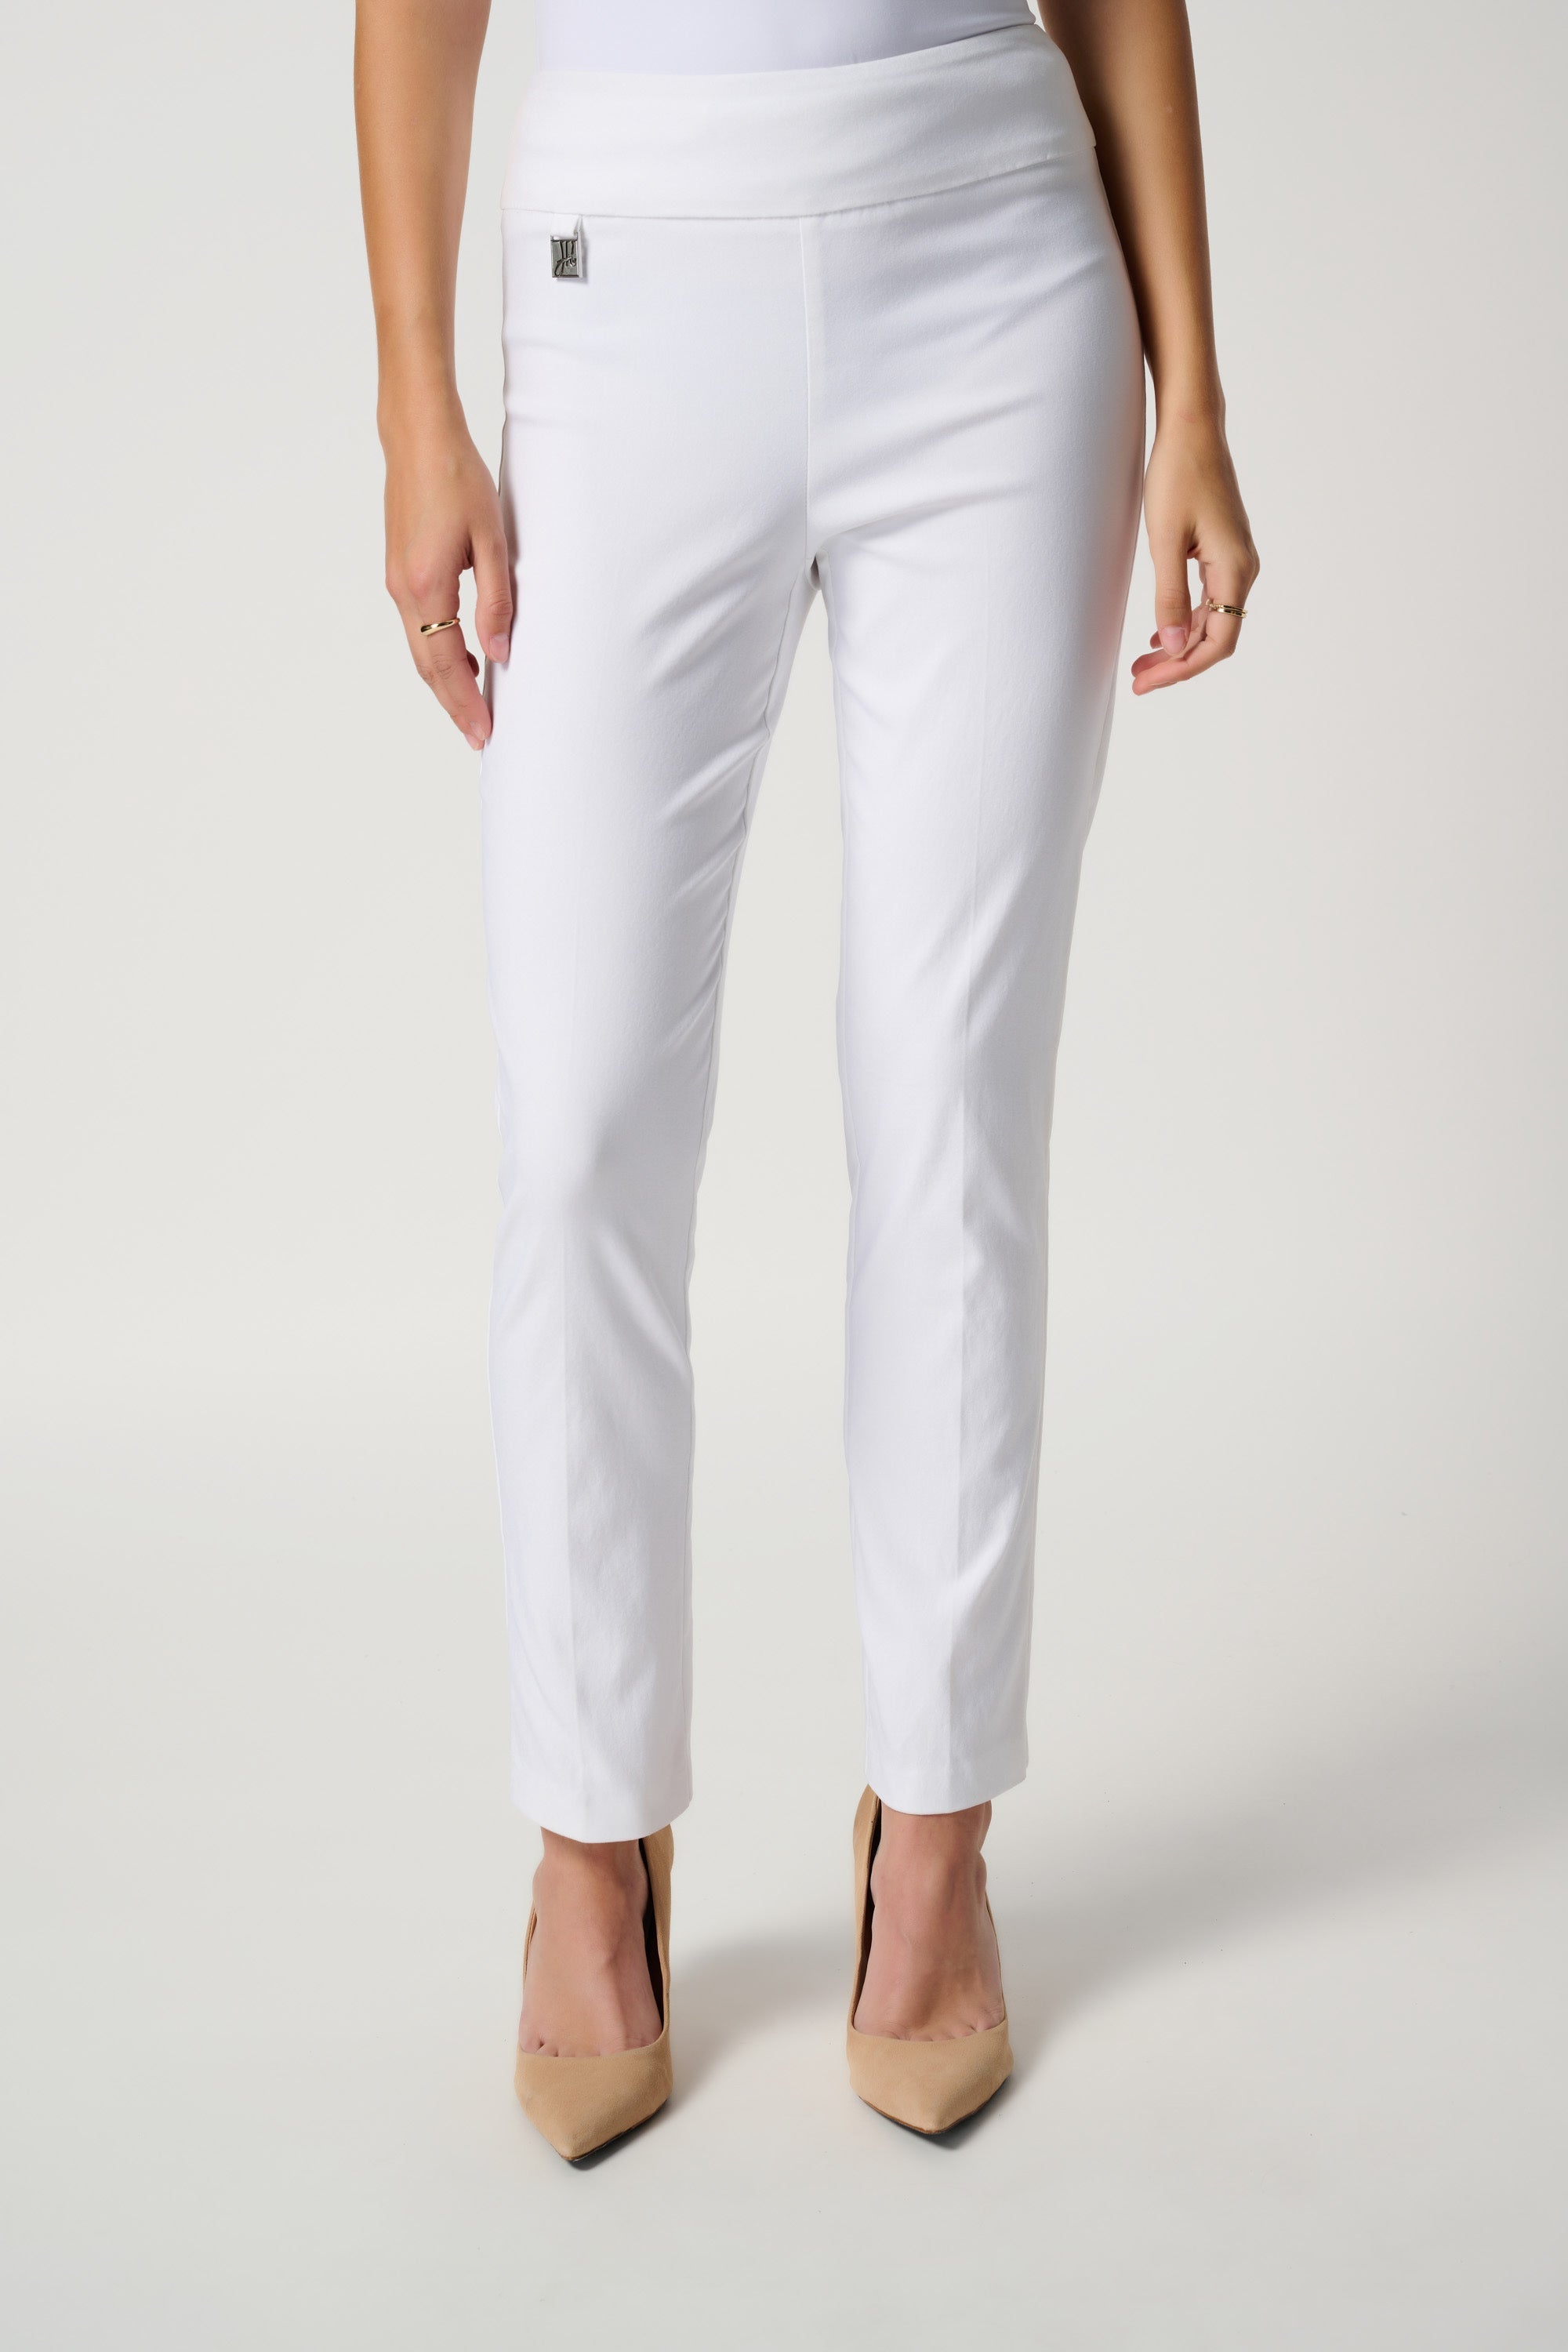 Joseph Ribkoff (201483NOS) Women's Classic Pull On Slim Pants in White